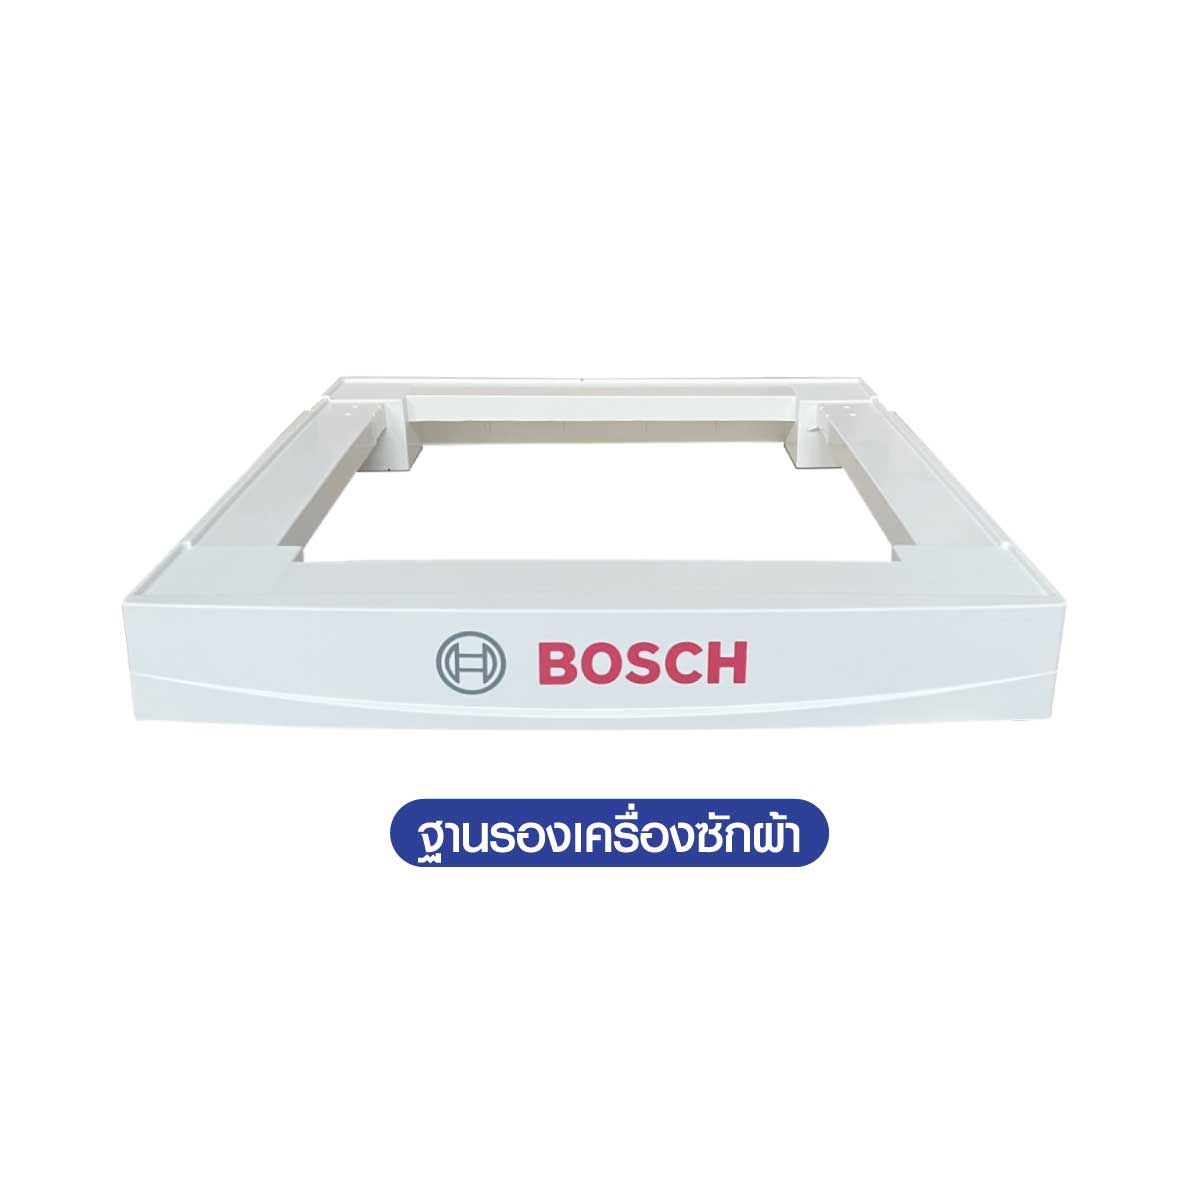 BOSCH เครื่องซักผ้าฝาหน้า10Kg Inverter, Serie 6 รุ่น WGG454A0TH